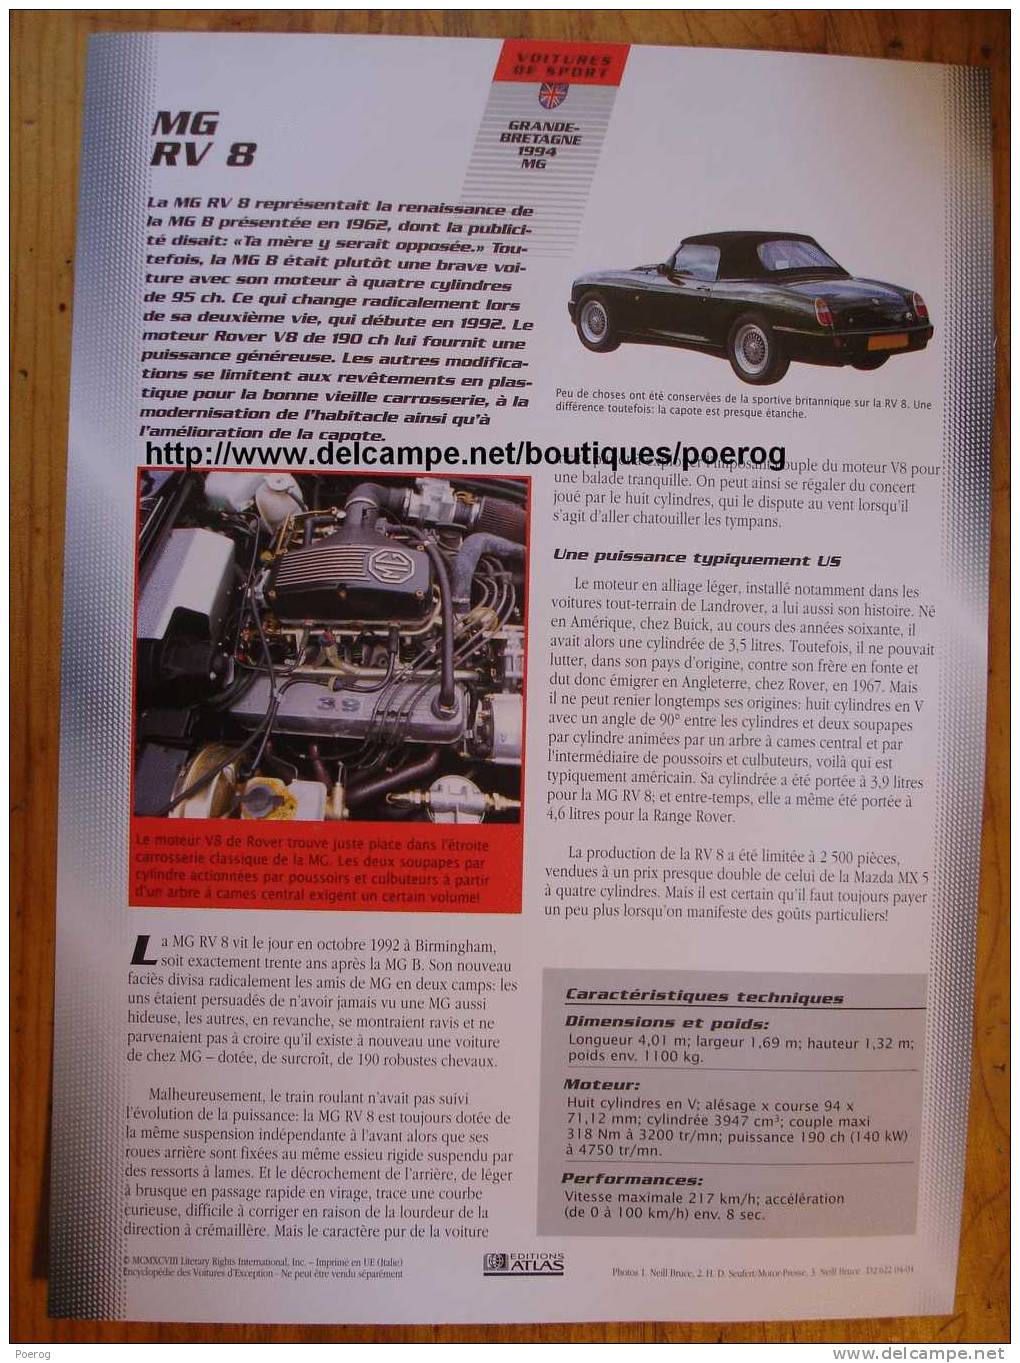 MG RV 8 - FICHE VOITURE GRAND FORMAT (A4) - 1998 - Auto Automobile Automobiles Voitures Car Cars - Coches